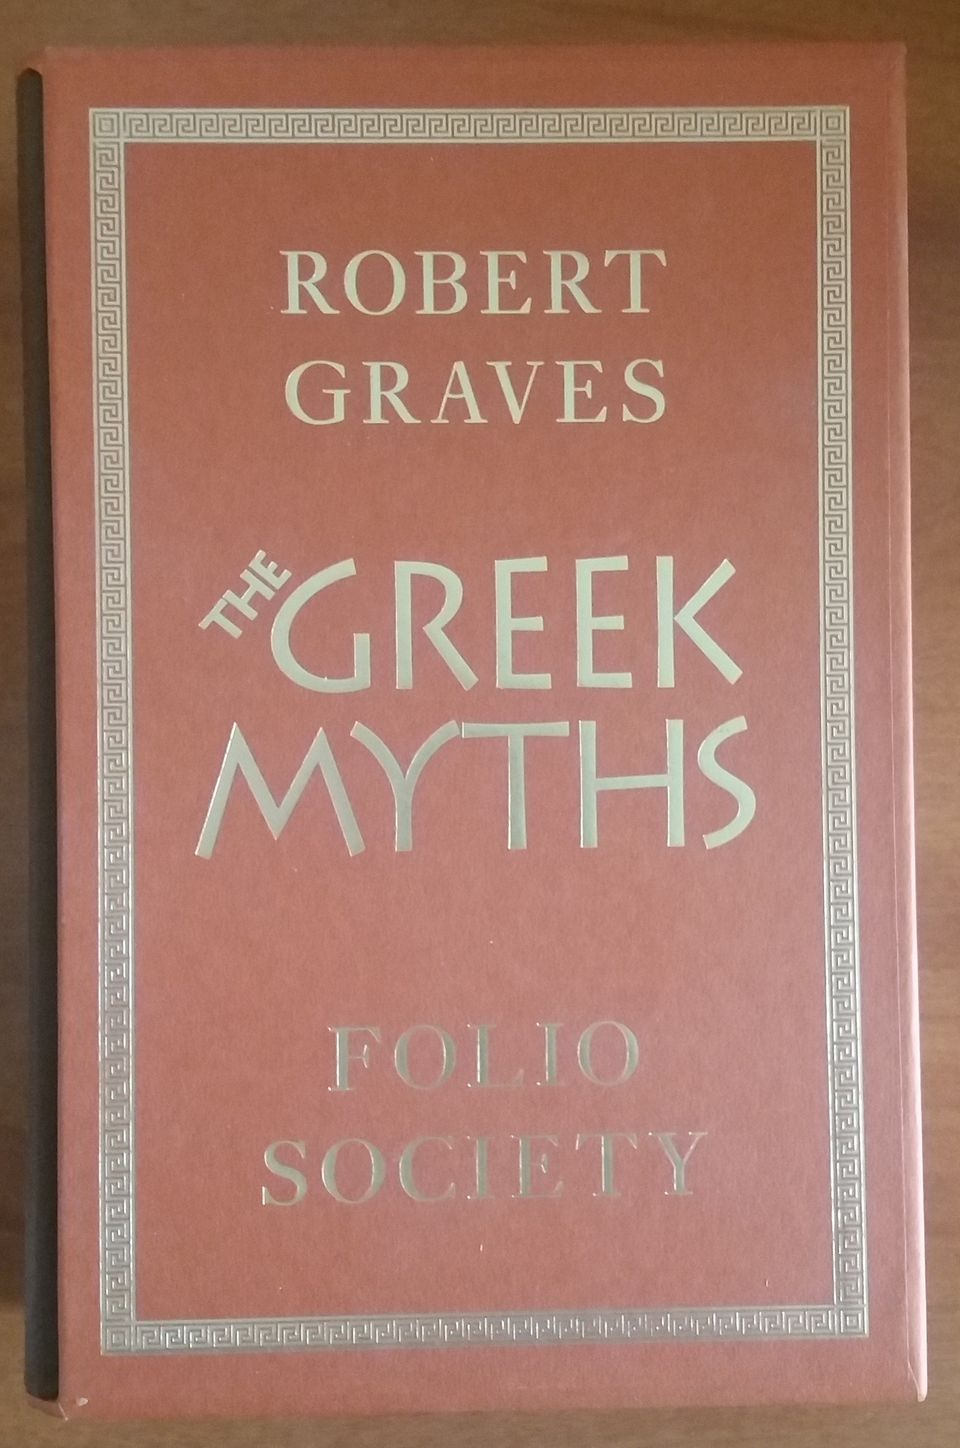 Robert Graves THE GREEK MYTHS  The Folio Society 1996